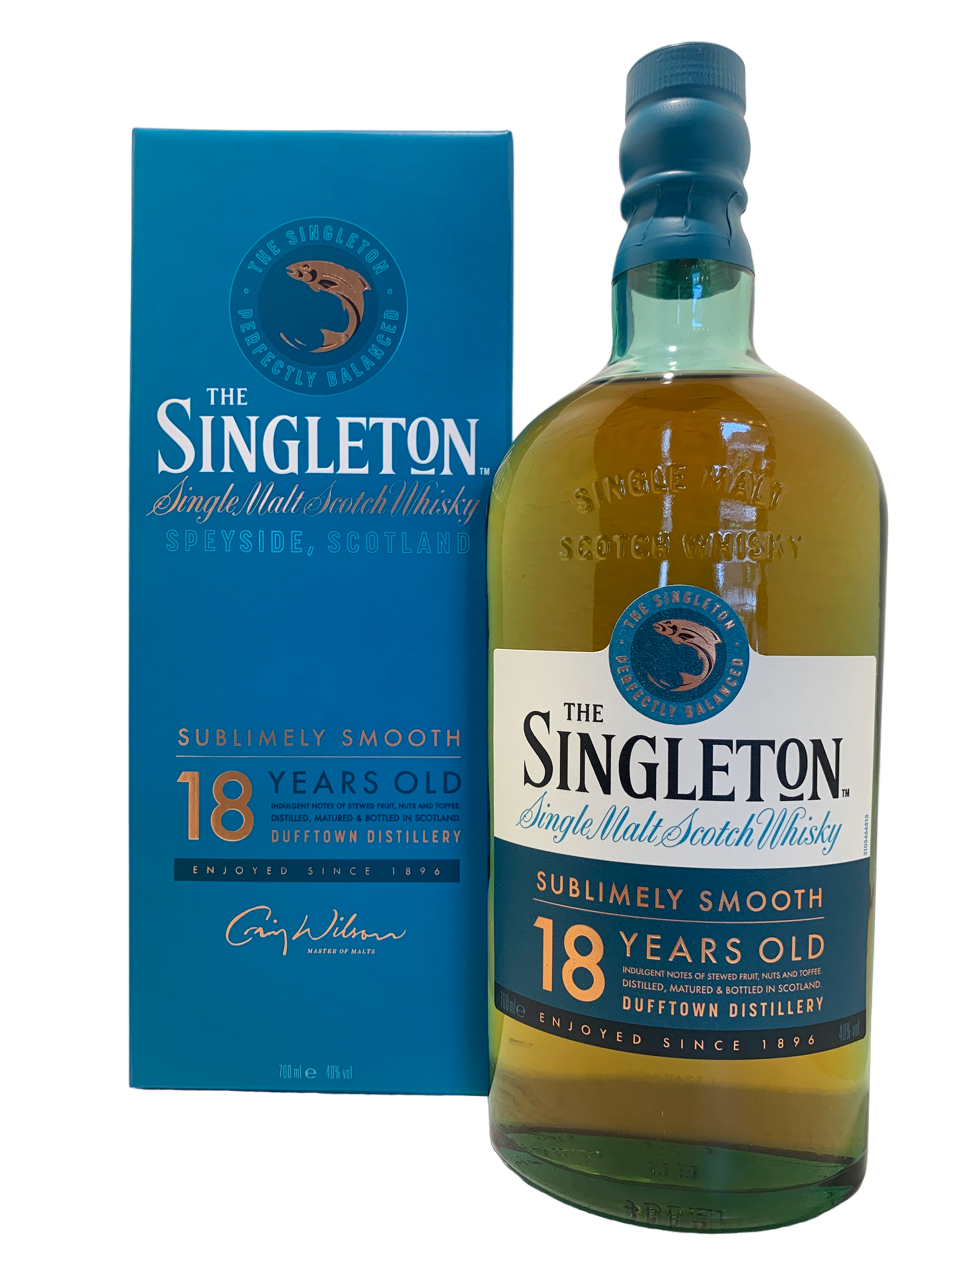 spiritueux spirit single malt scotch whisky the singleton sublimely smooth 18 years old